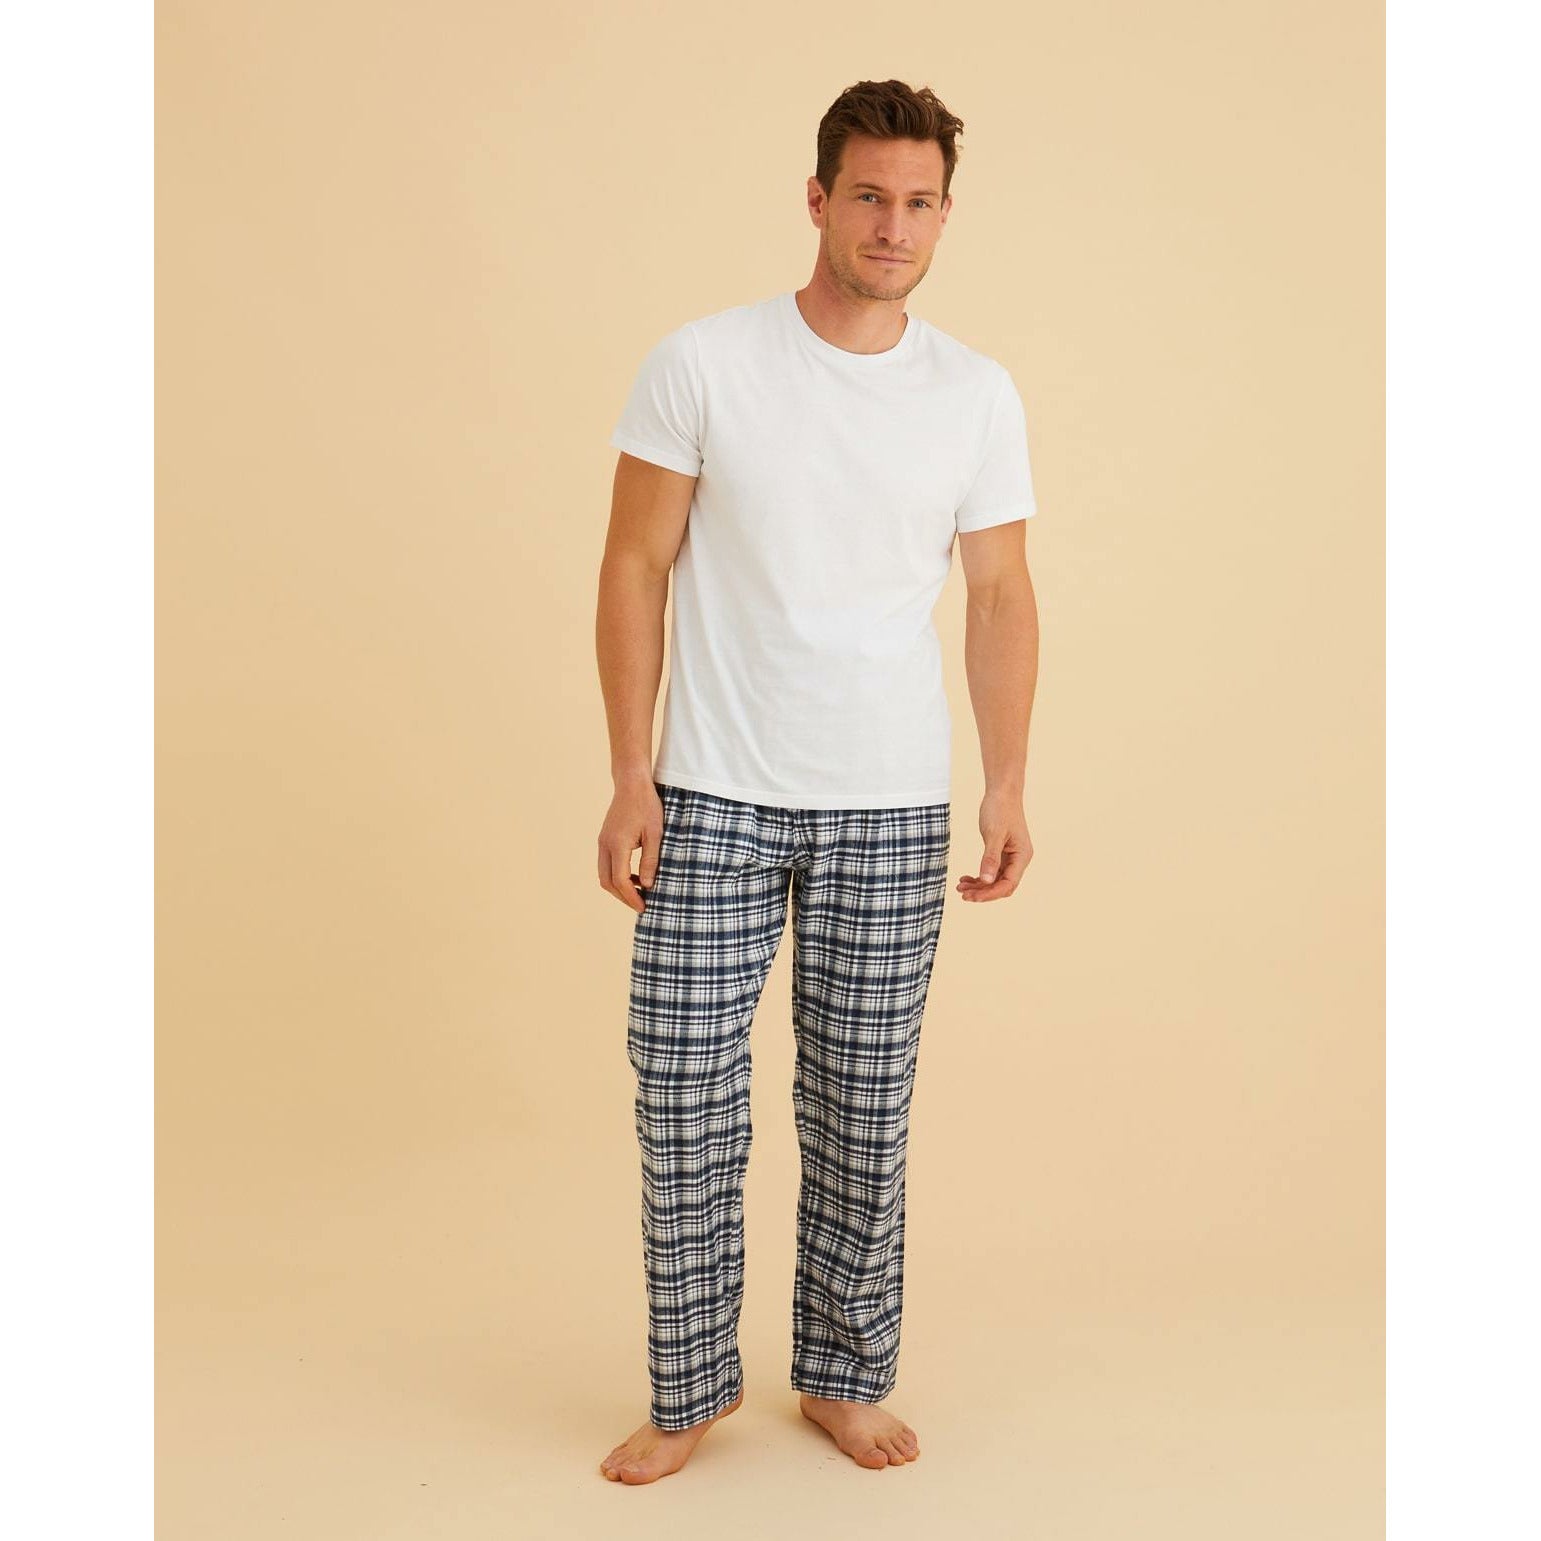 Mens Flannel Pyjama Bottoms Nightwear Trouser Check Cotton Plaid PJ Pants  Lounge | eBay